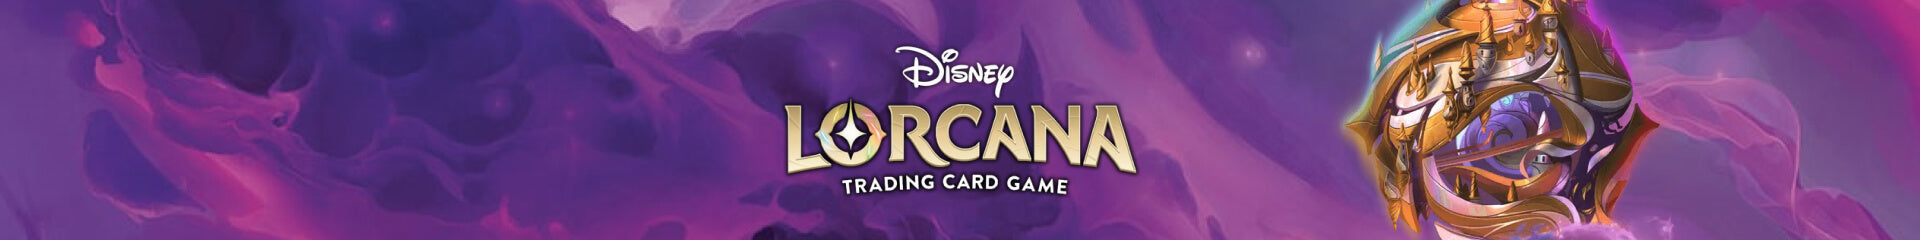 Lorcana Trading Card Game – Disney – Otakura.com